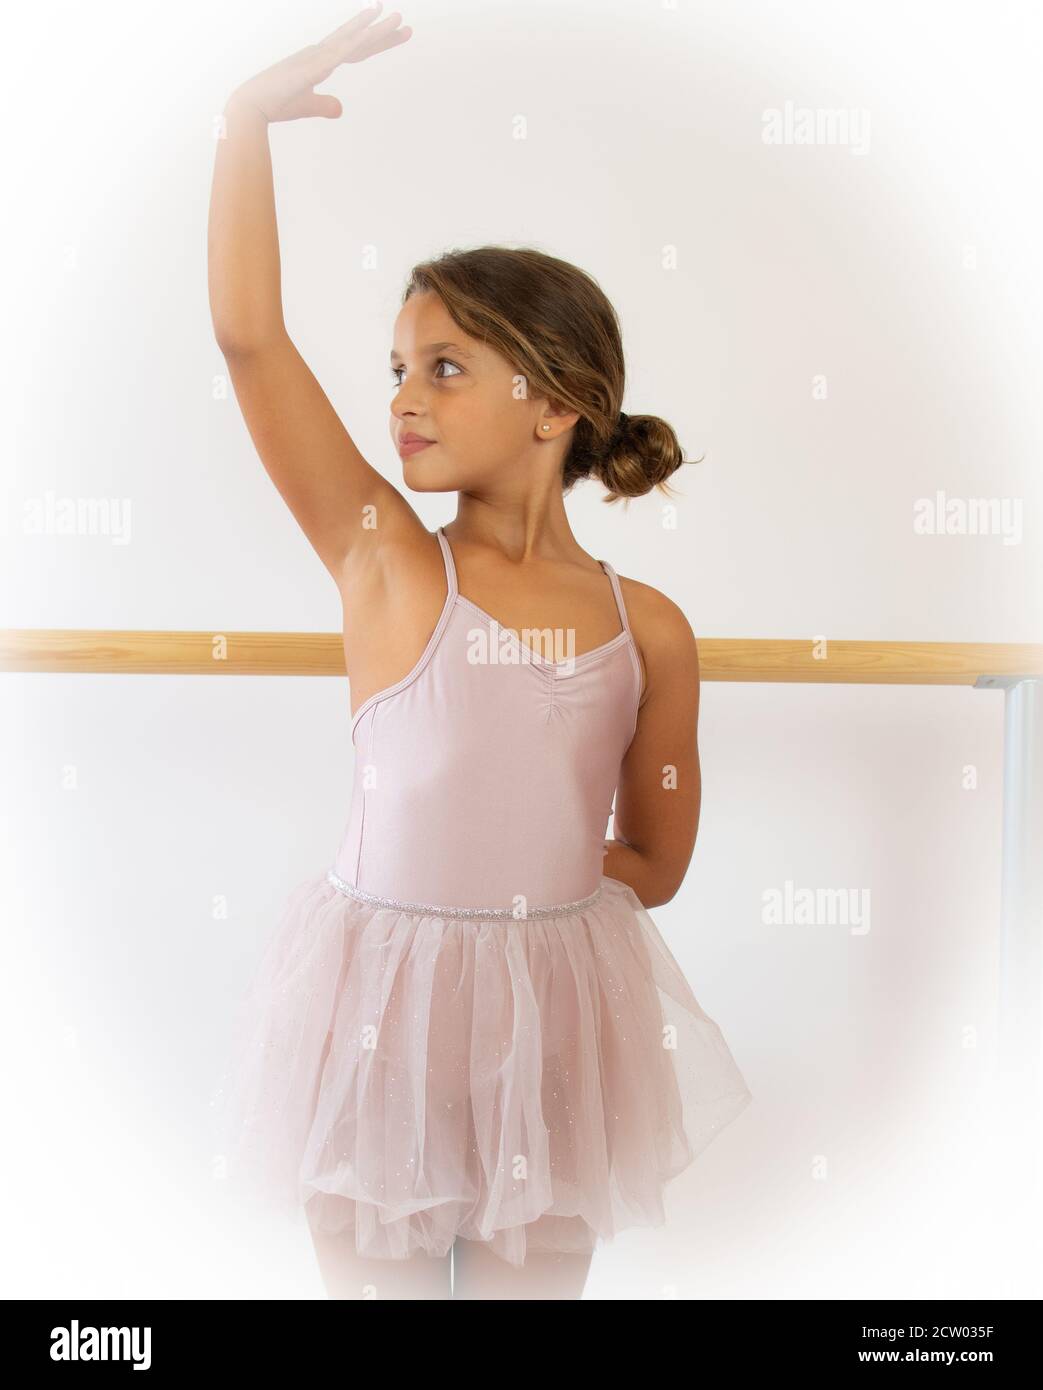 https://c8.alamy.com/comp/2CW035F/cute-adorable-ballerina-little-girl-in-pink-tutu-dance-practices-ballet-dancing-2CW035F.jpg